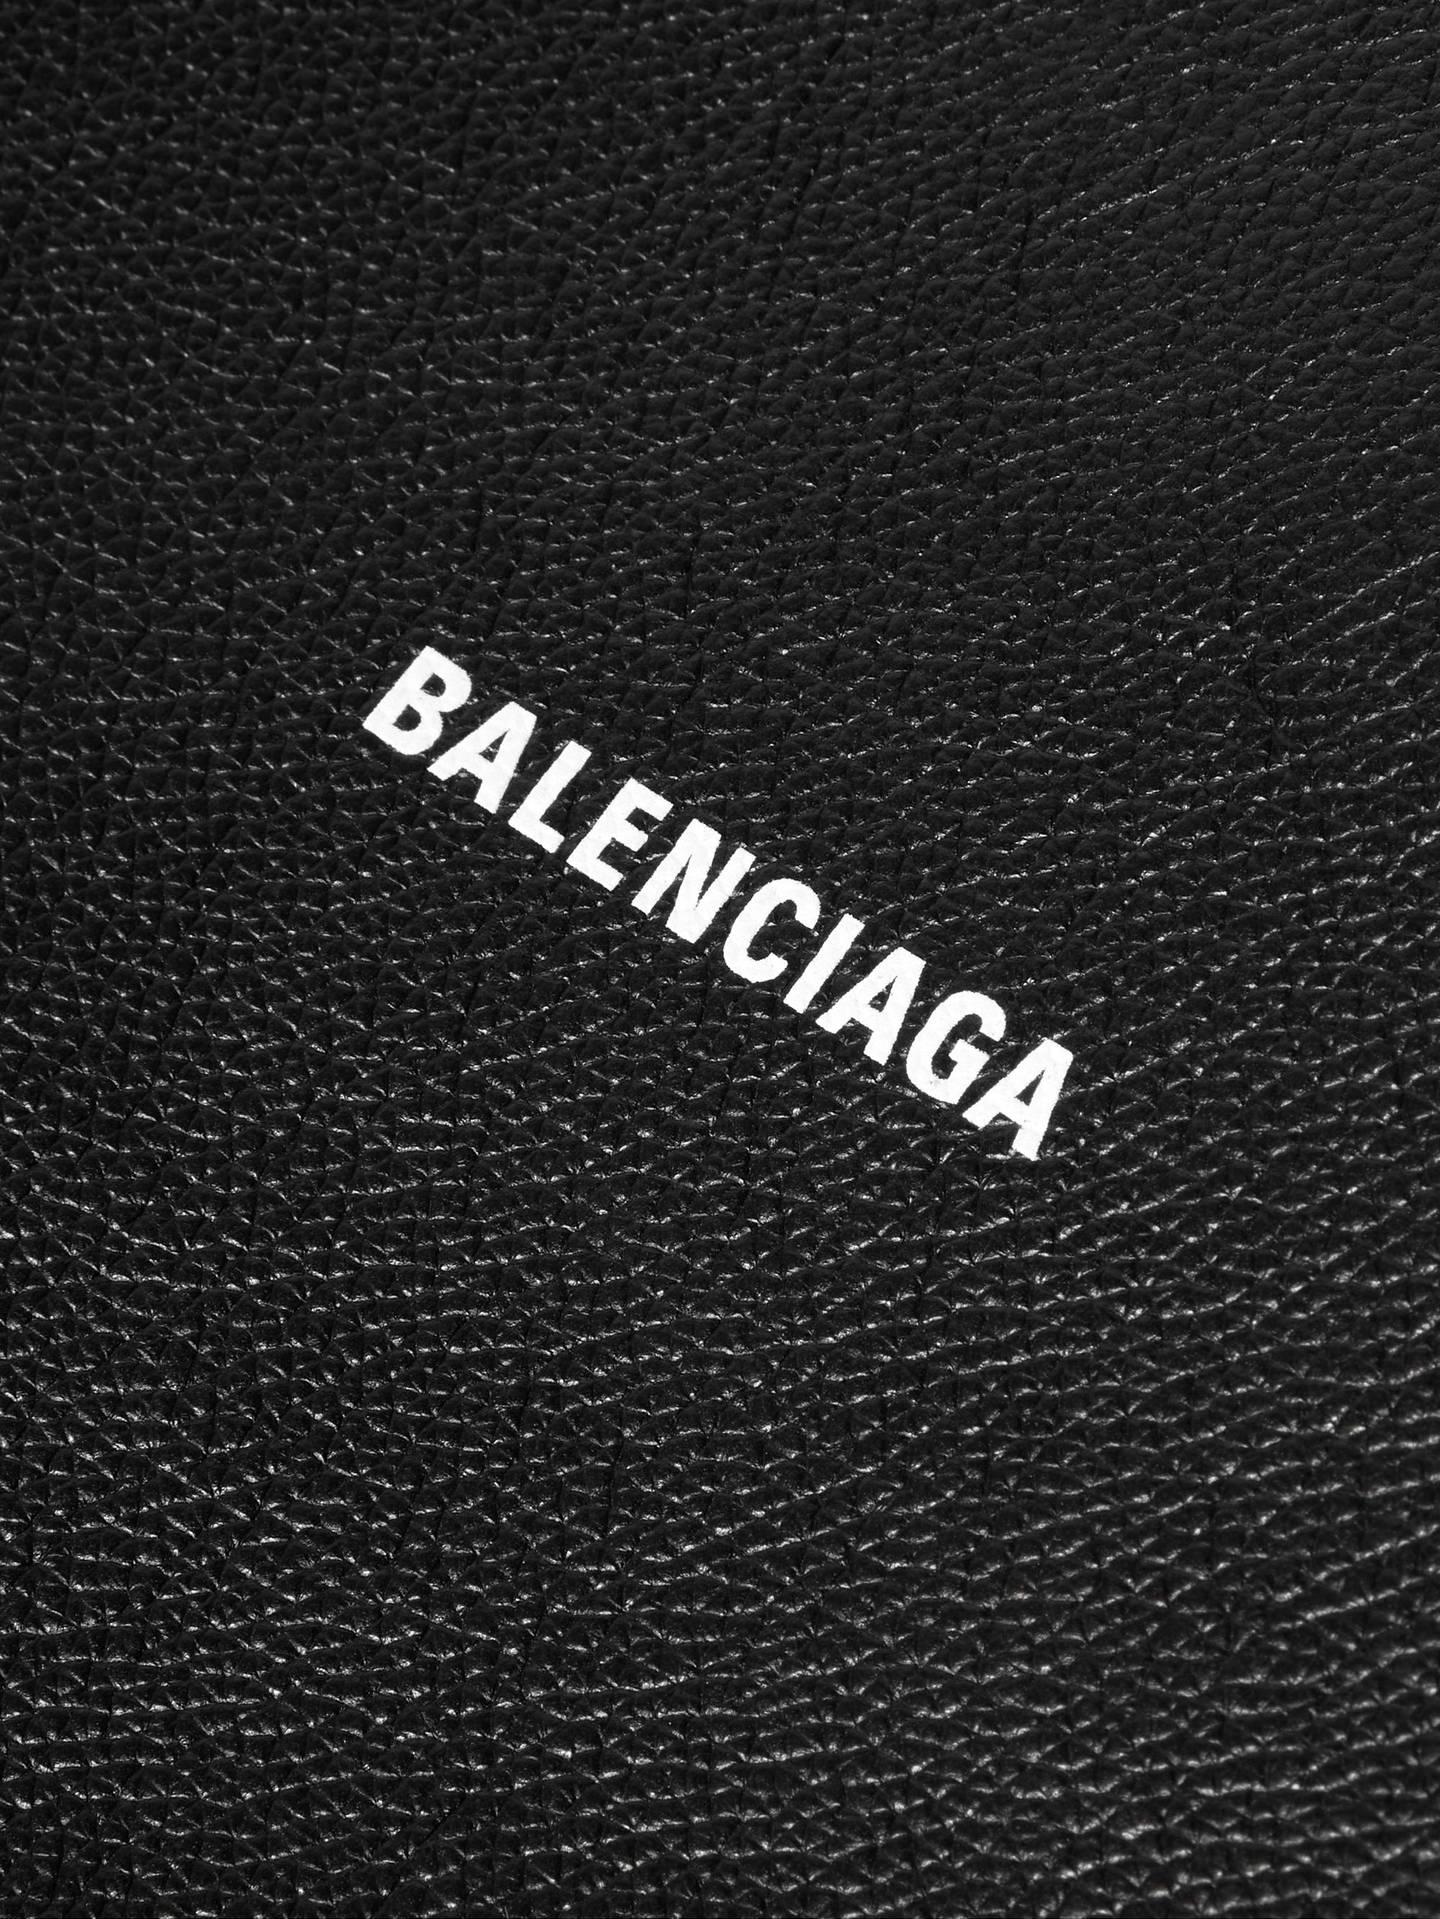 Download Balenciaga Logo On Leather Wallpaper